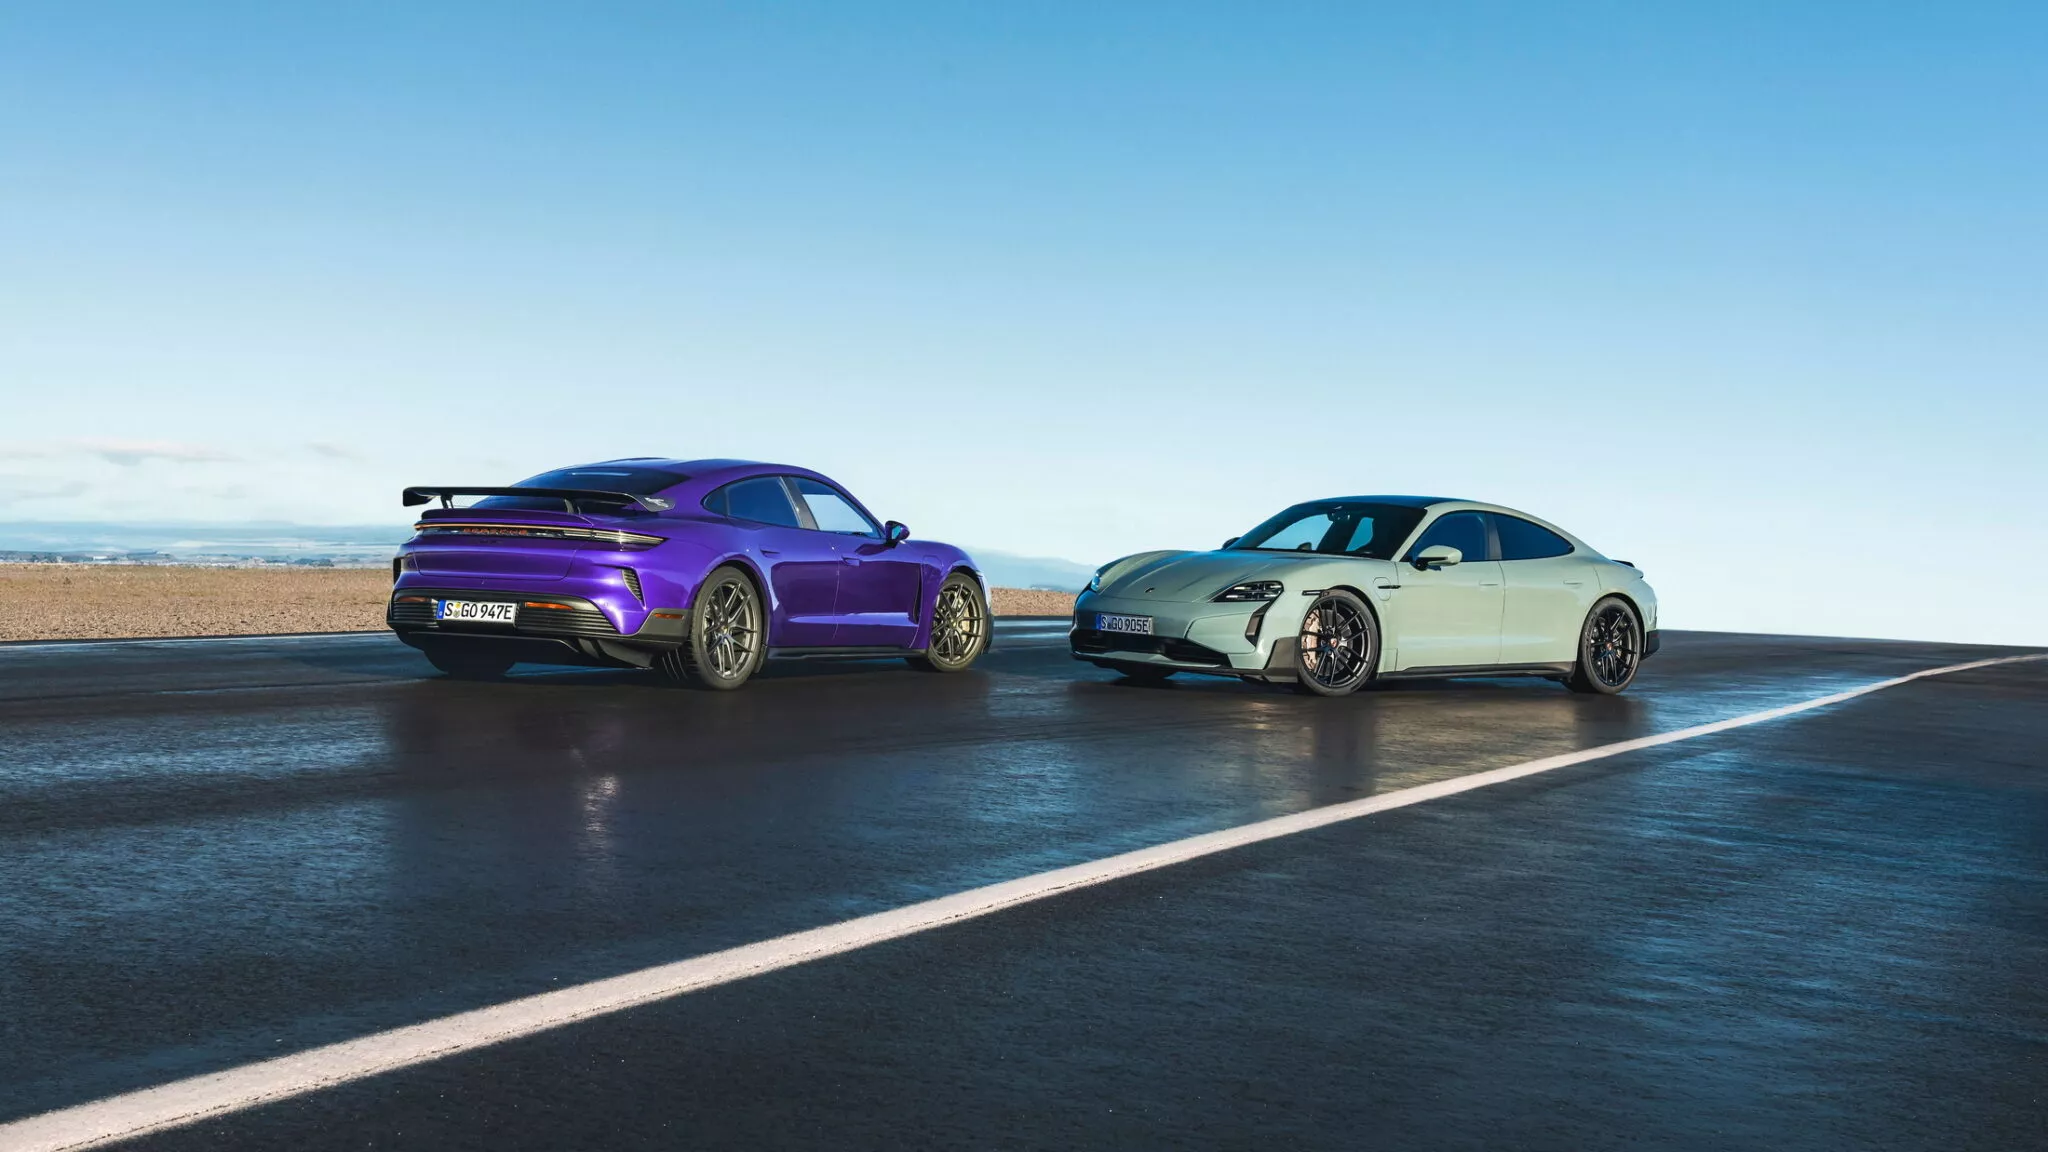 Siêu xe điện Porsche Taycan Turbo GT trình làng, mạnh 1.092 mã lực porsche-taycan-turbo-gt-sky-purple-metallic-7-2048x1152.webp